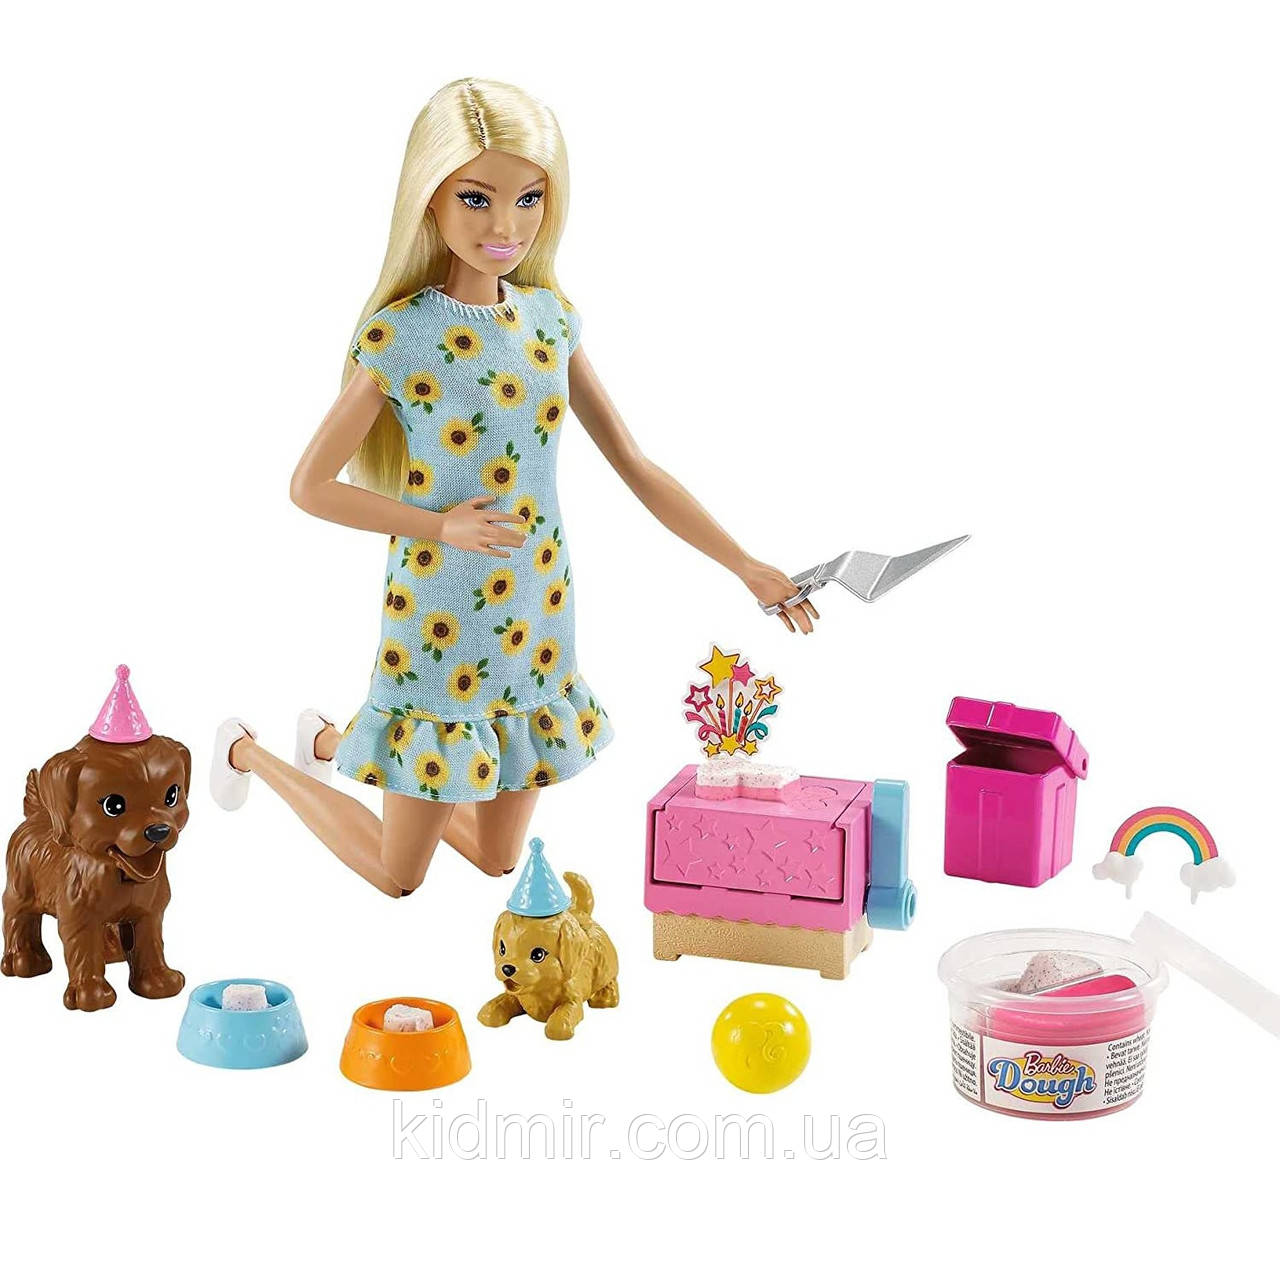 OUTLET — Лялька Барбі Вечірка для цуценят Barbie Puppy Party GXV75 Пошкоджена коробка